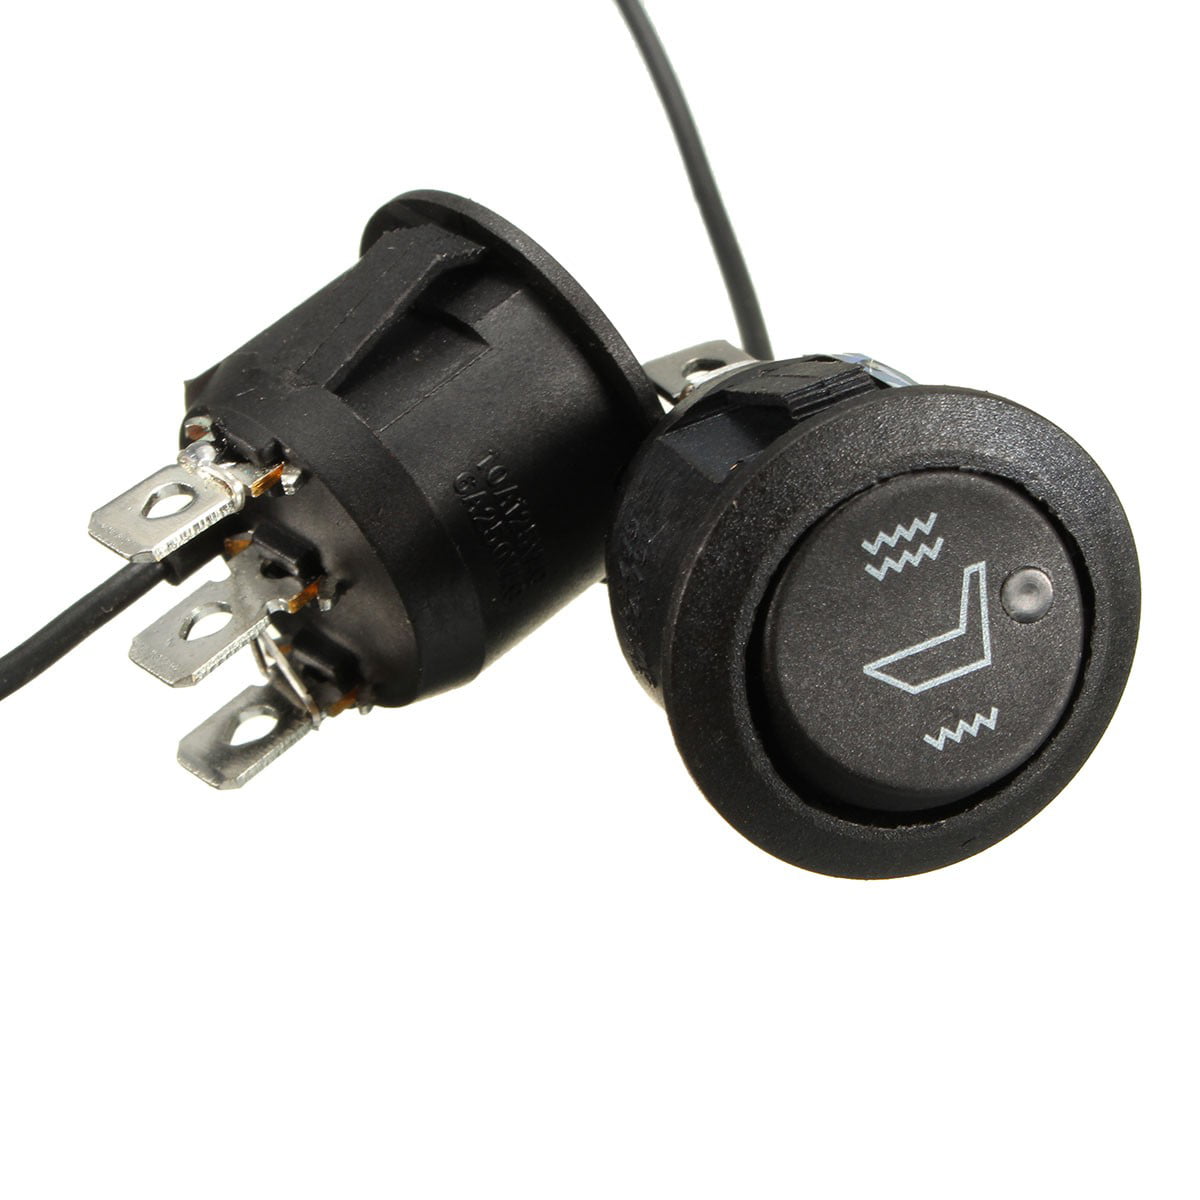 Keenso Seat Heater Switch Universal 3 Pin Round Heated Rocker Hi Low Off Control 2x